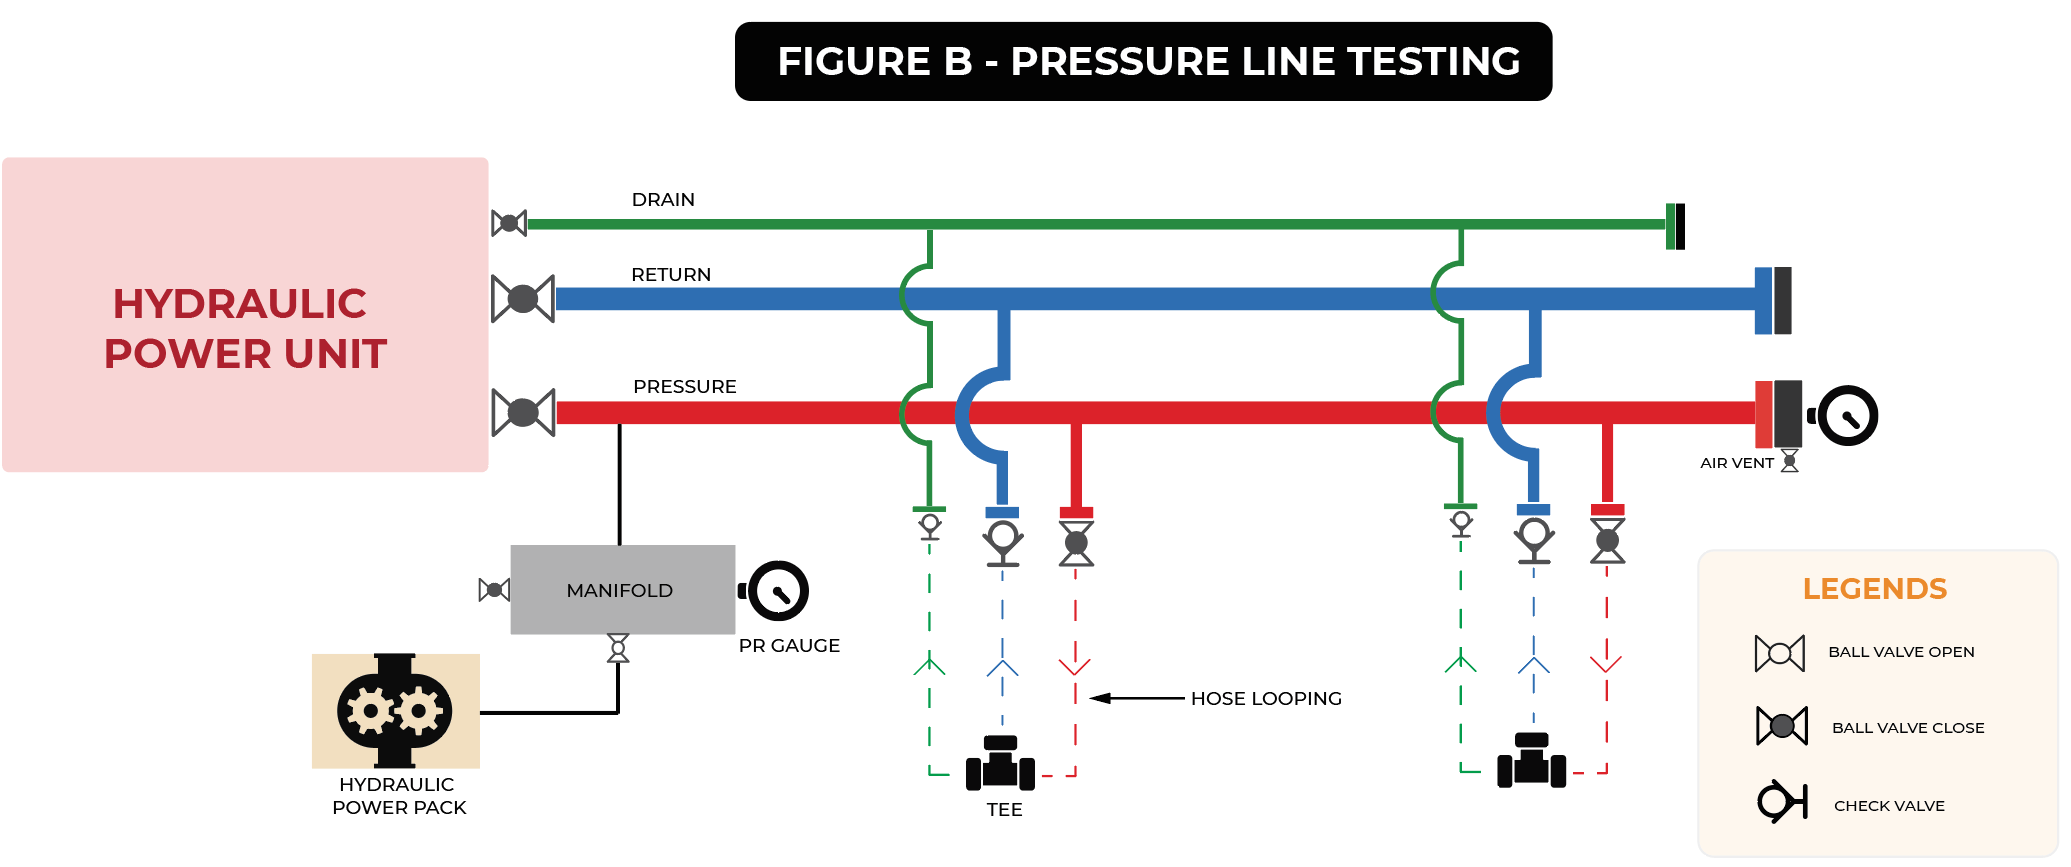 Pressure line testing